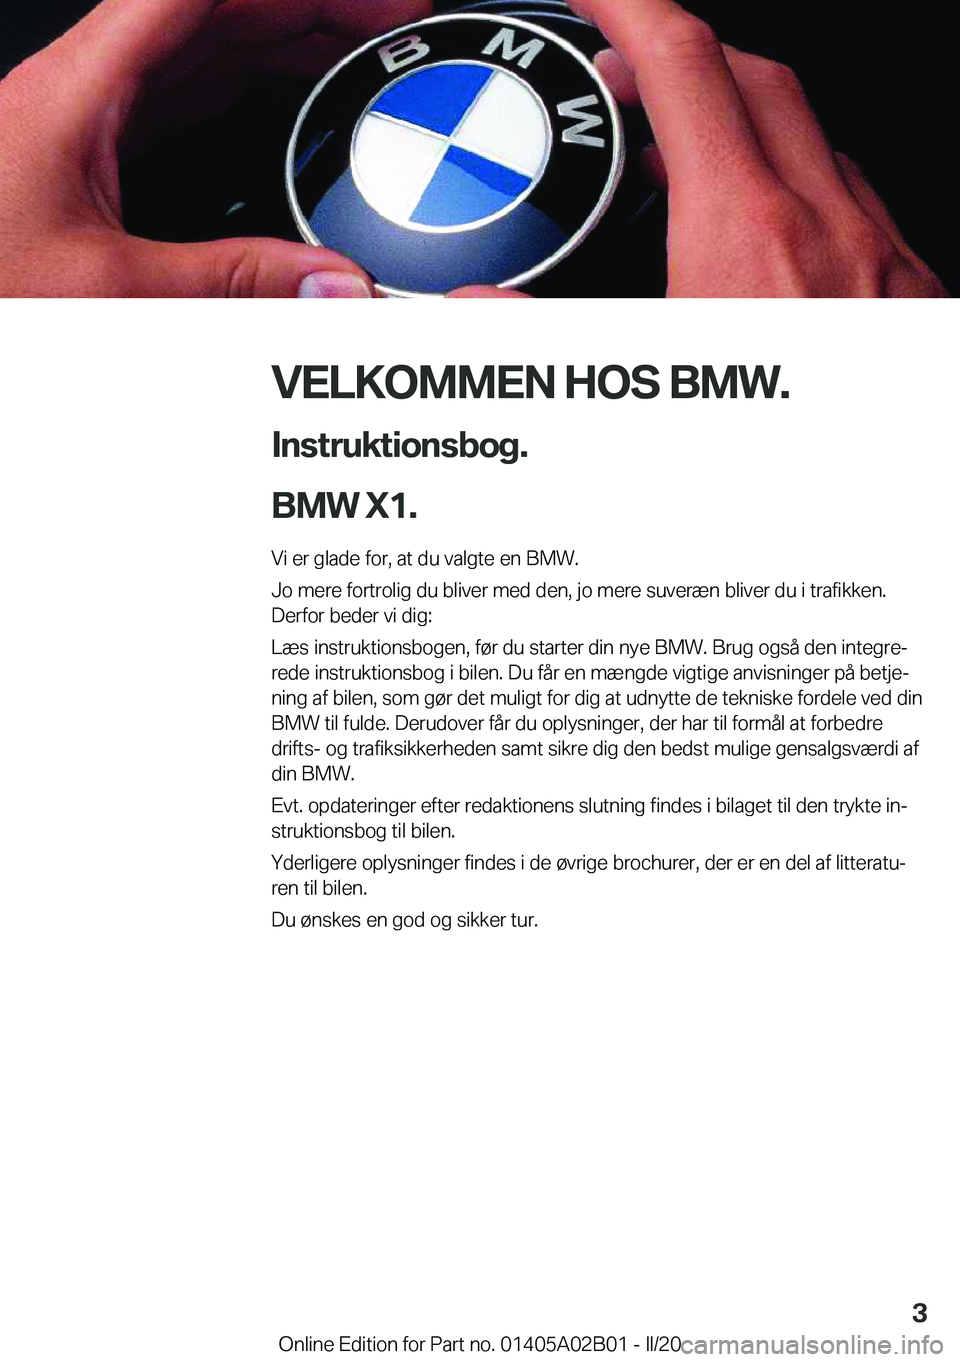 BMW X1 2020  InstruktionsbØger (in Danish) �V�E�L�K�O�M�M�E�N��H�O�S��B�M�W�.
�I�n�s�t�r�u�k�t�i�o�n�s�b�o�g�.
�B�M�W��X�1�. �V�i��e�r��g�l�a�d�e��f�o�r�,��a�t��d�u��v�a�l�g�t�e��e�n��B�M�W�.
�J�o��m�e�r�e��f�o�r�t�r�o�l�i�g��d�u